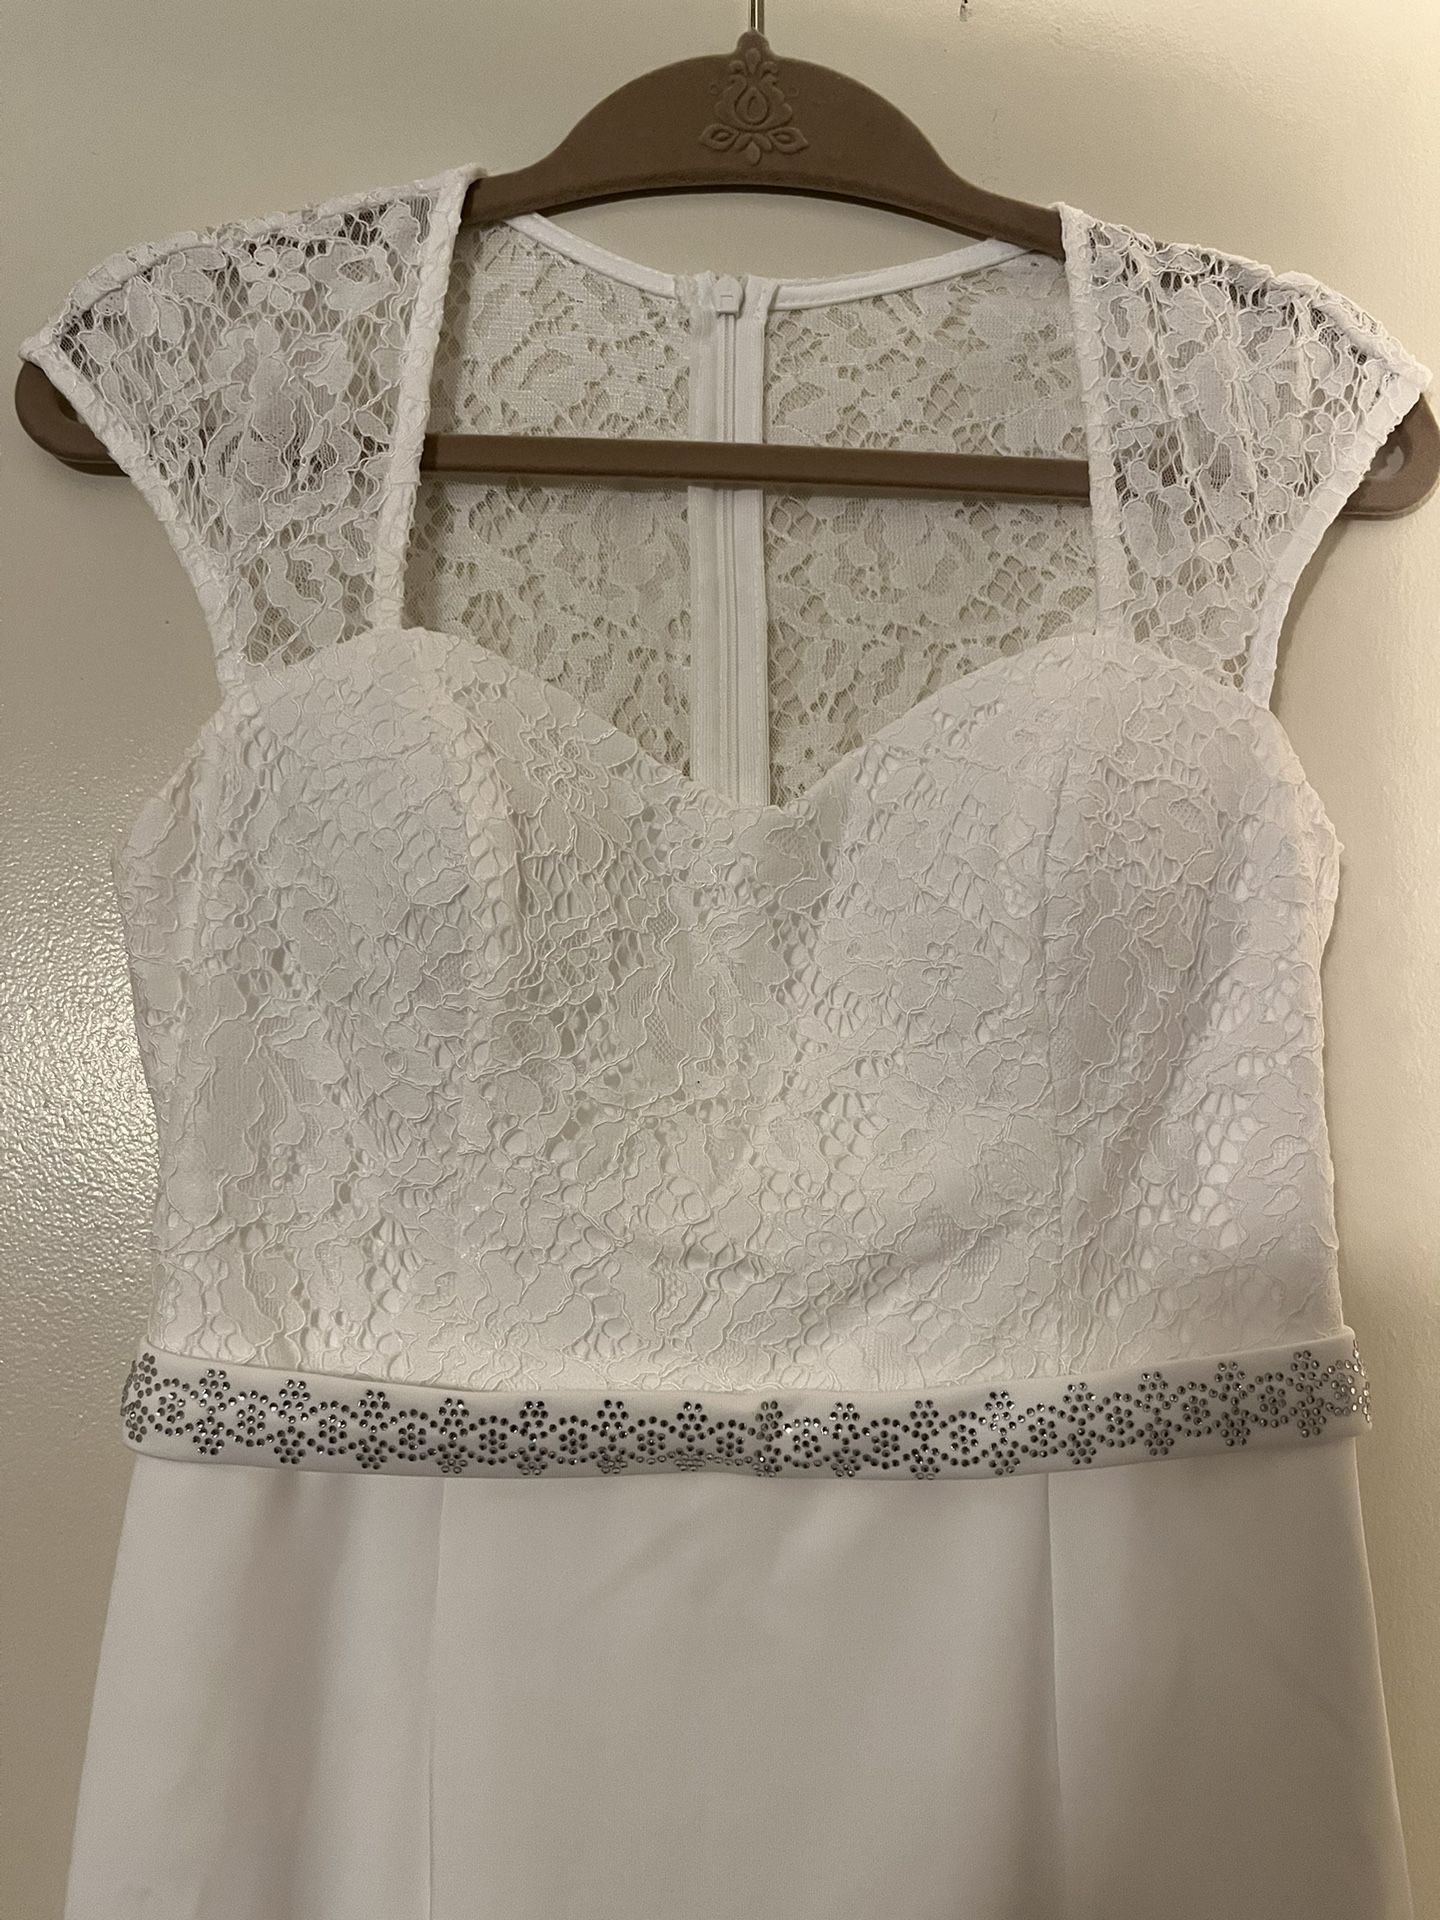 Shein Dress, White, Size 4